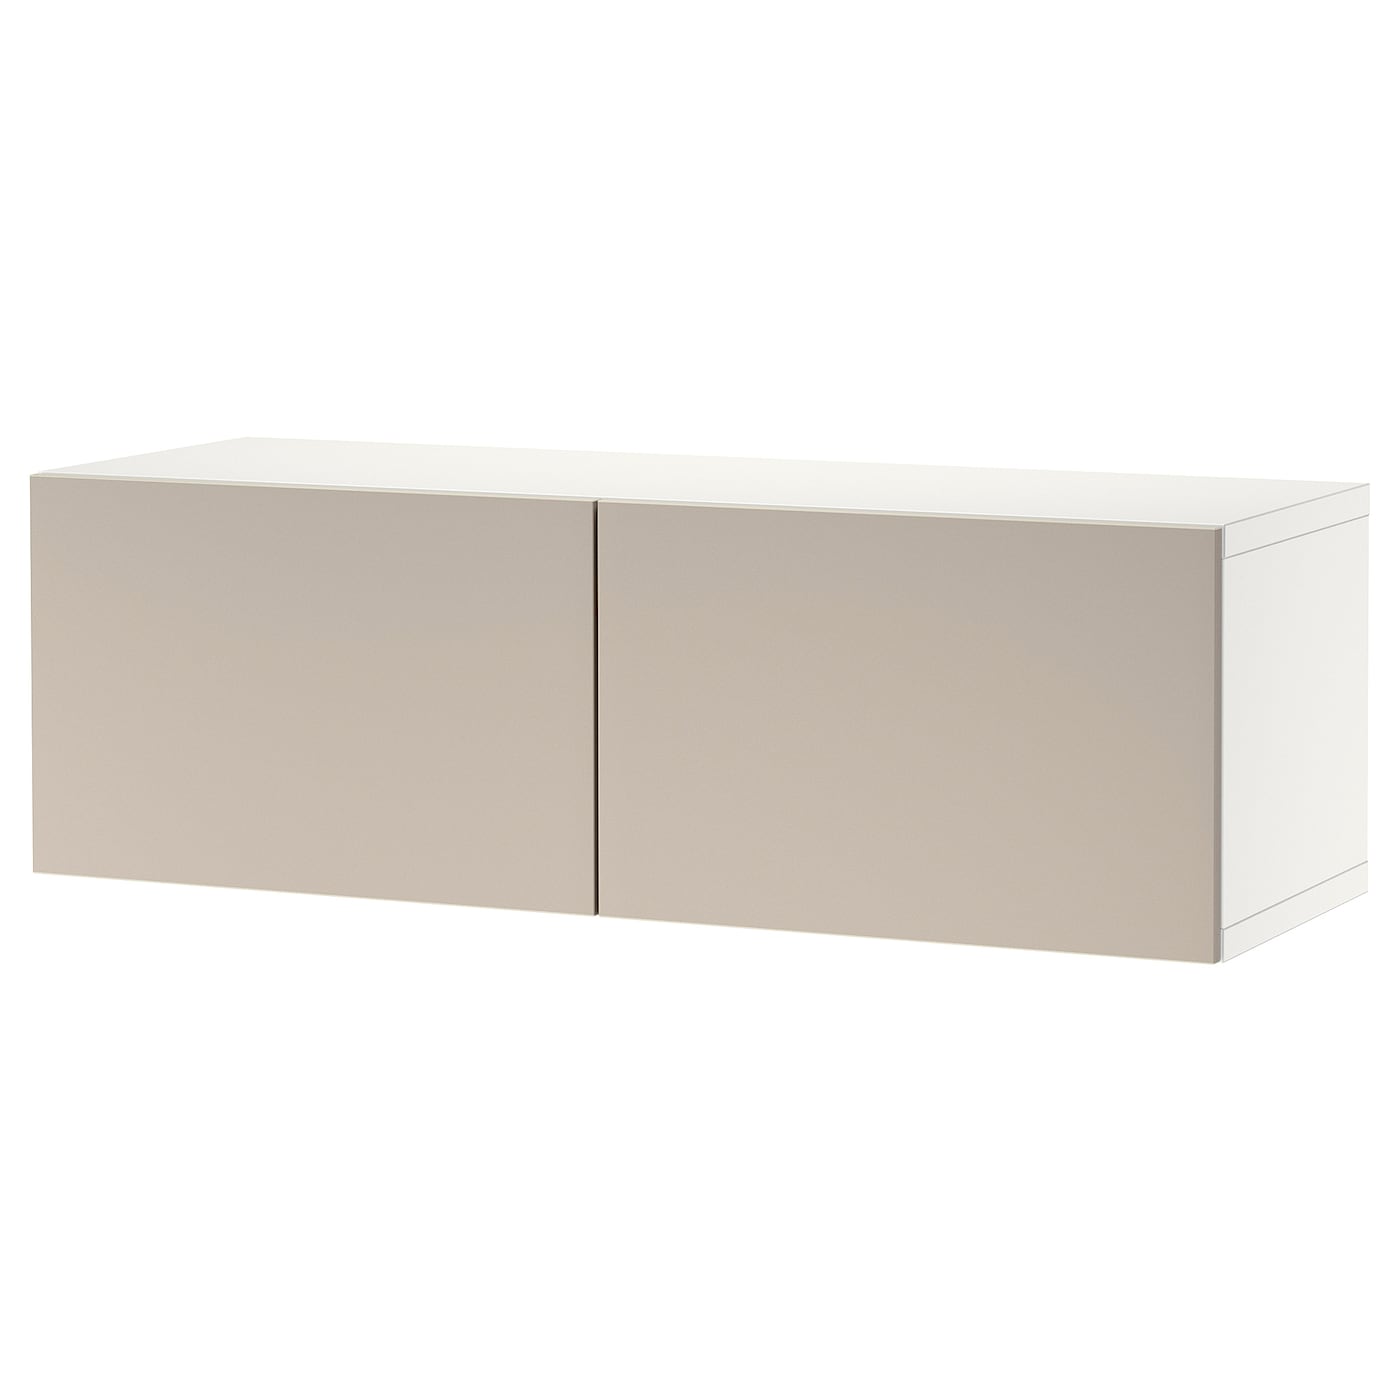 Навесной шкаф - IKEA BESTÅ/BESTA, 120x42x38 см, белый, Бесто ИКЕА